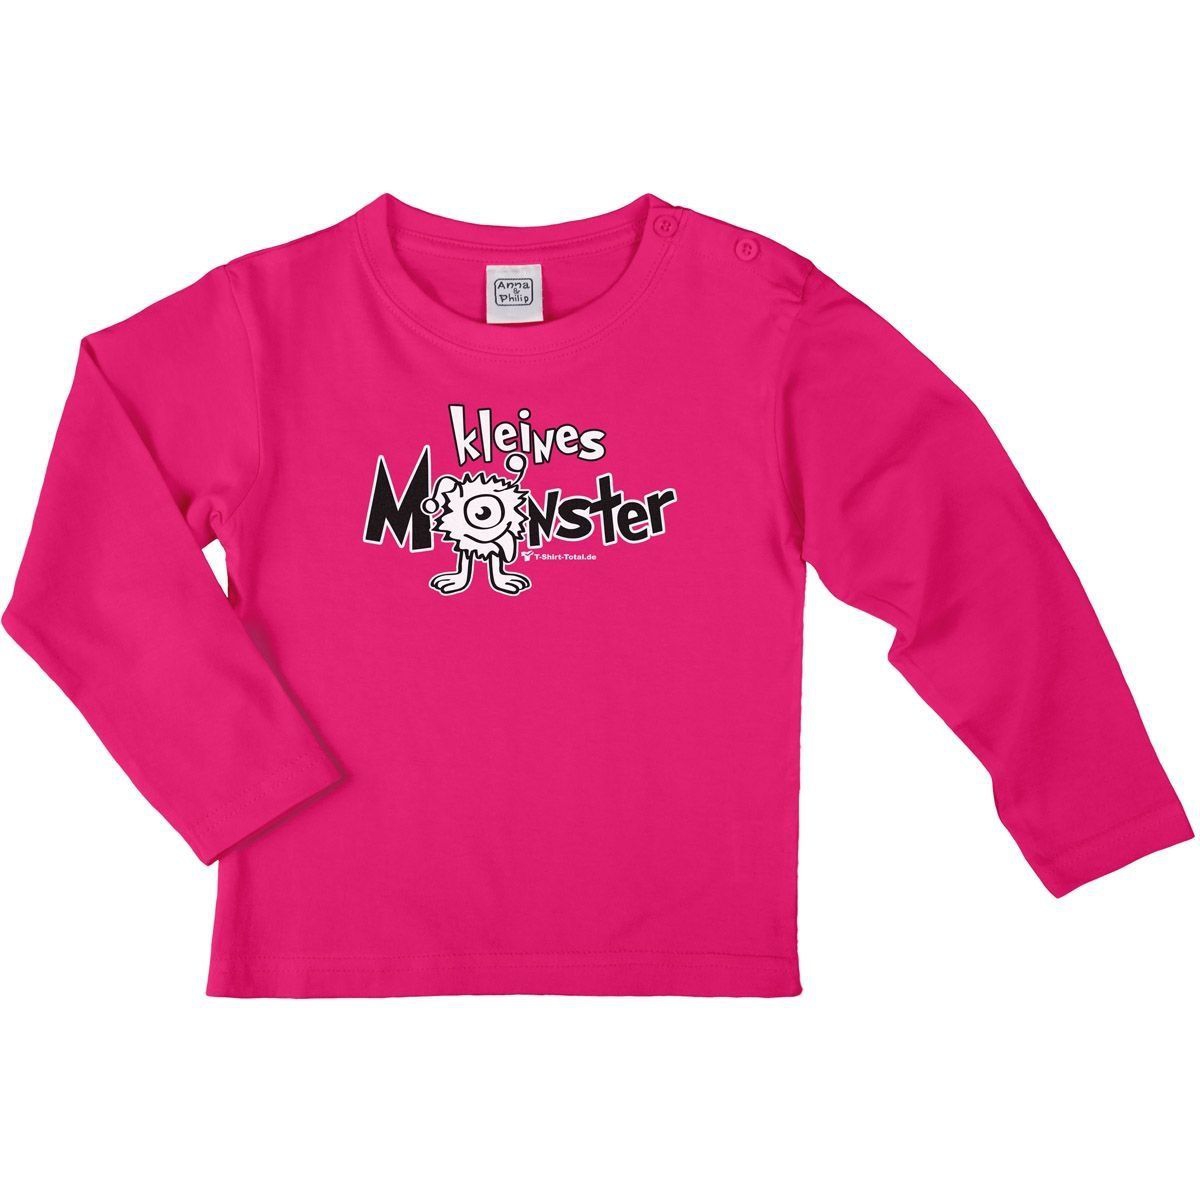 Kleines Monster Kinder Langarm Shirt pink 110 / 116